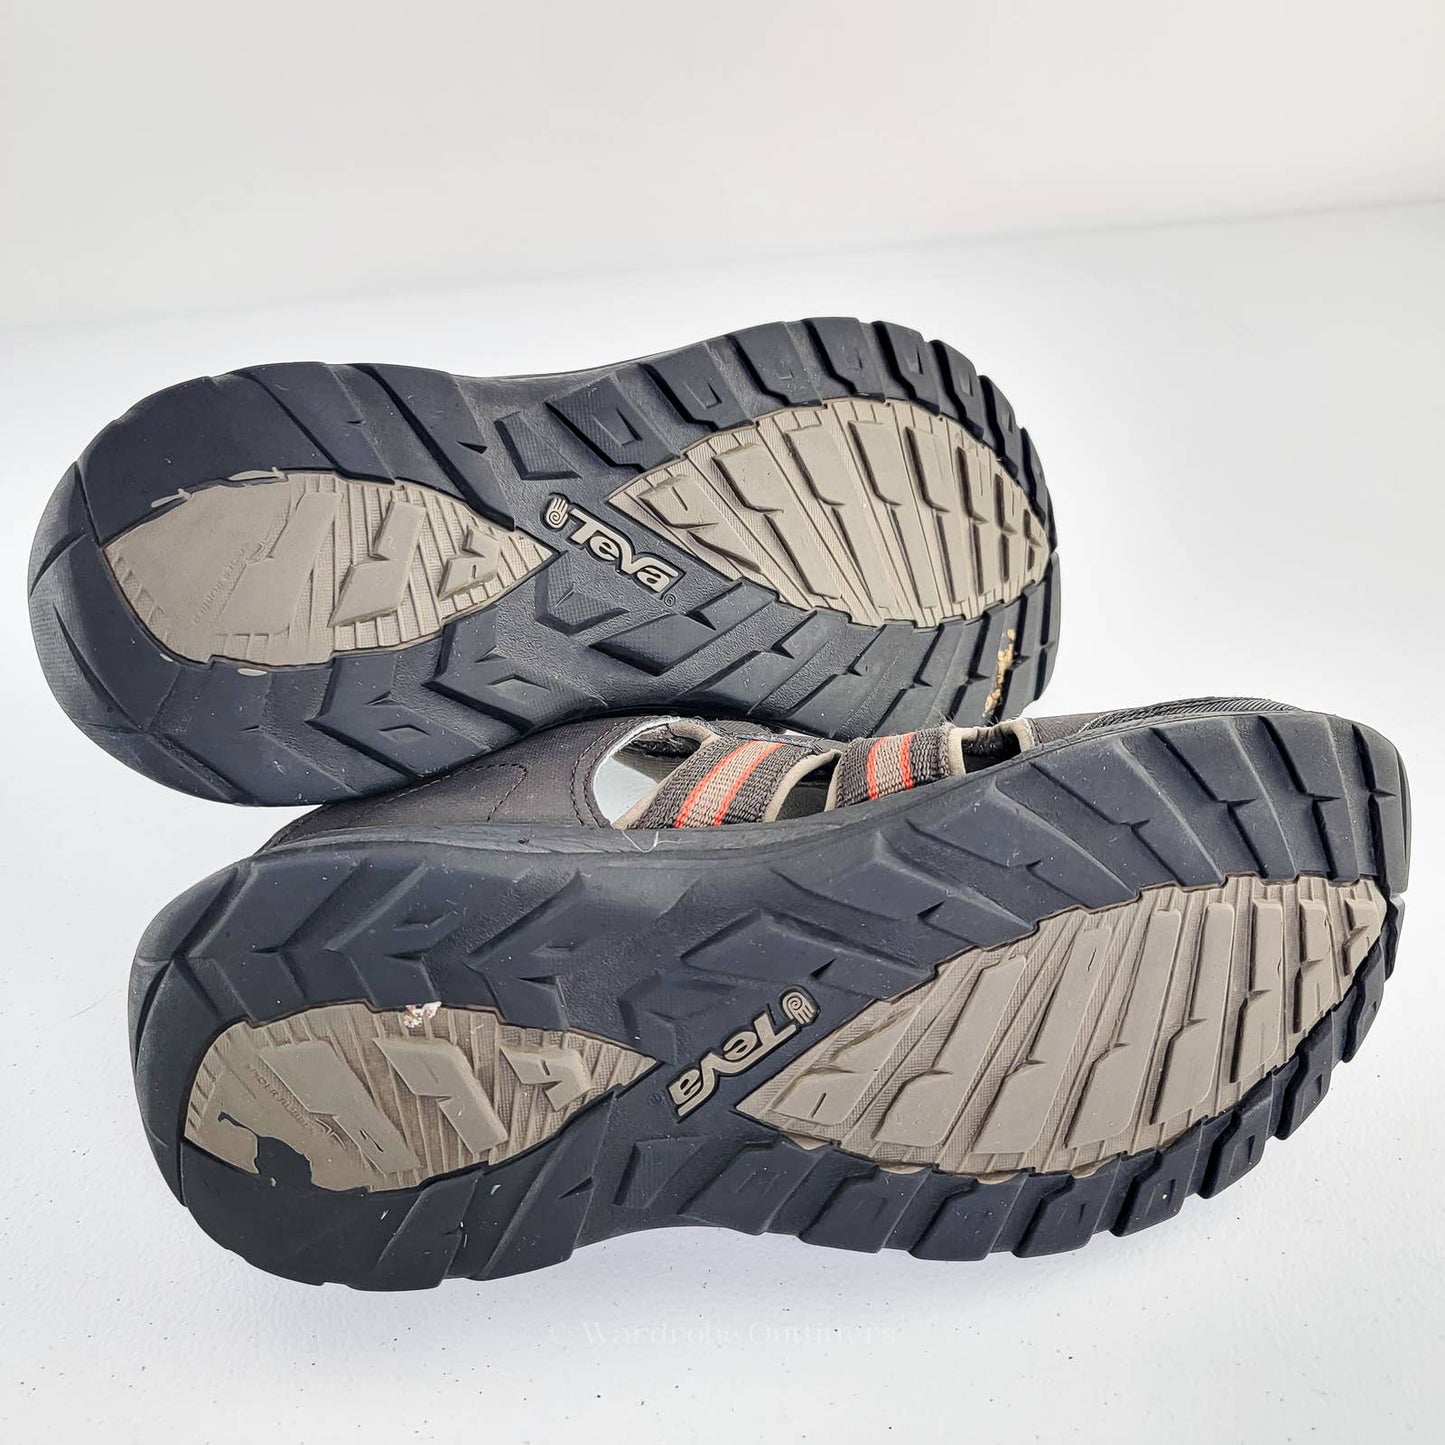 Teva Forebay Duster II Outdoor Hiking Fisherman Sandals - 11